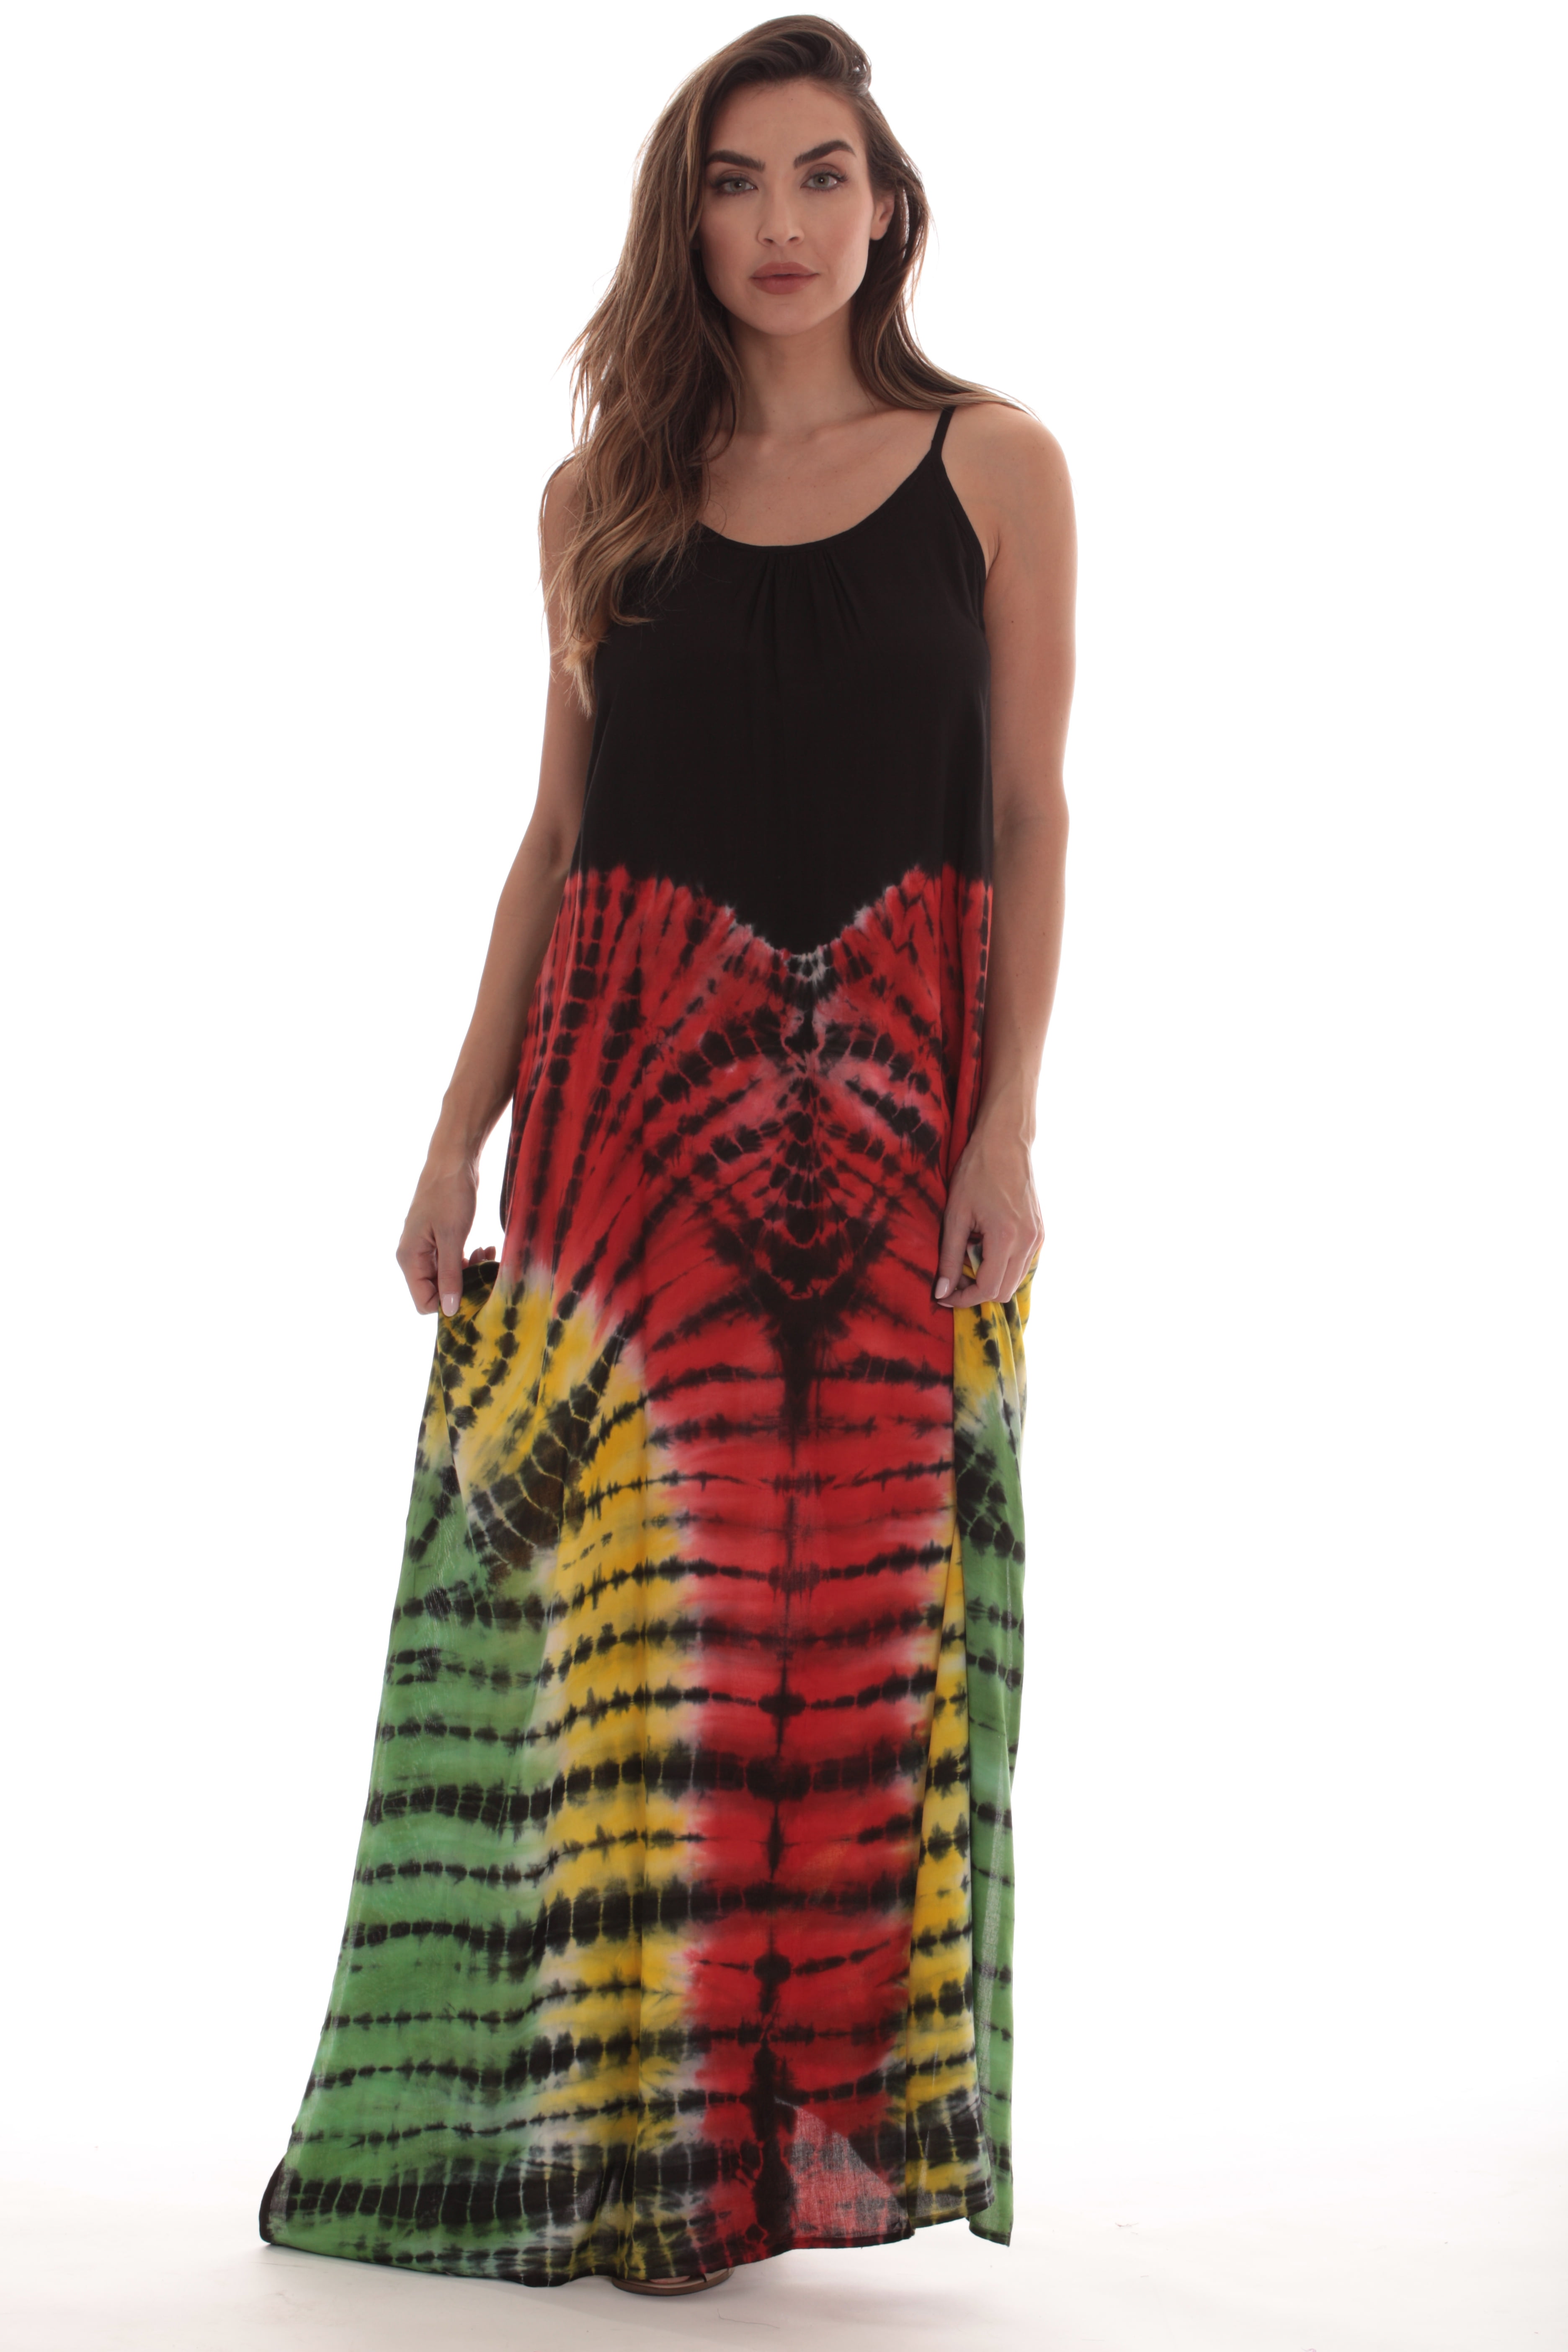 Riviera Sun Rasta Maxi Dresses for Women - Walmart.com